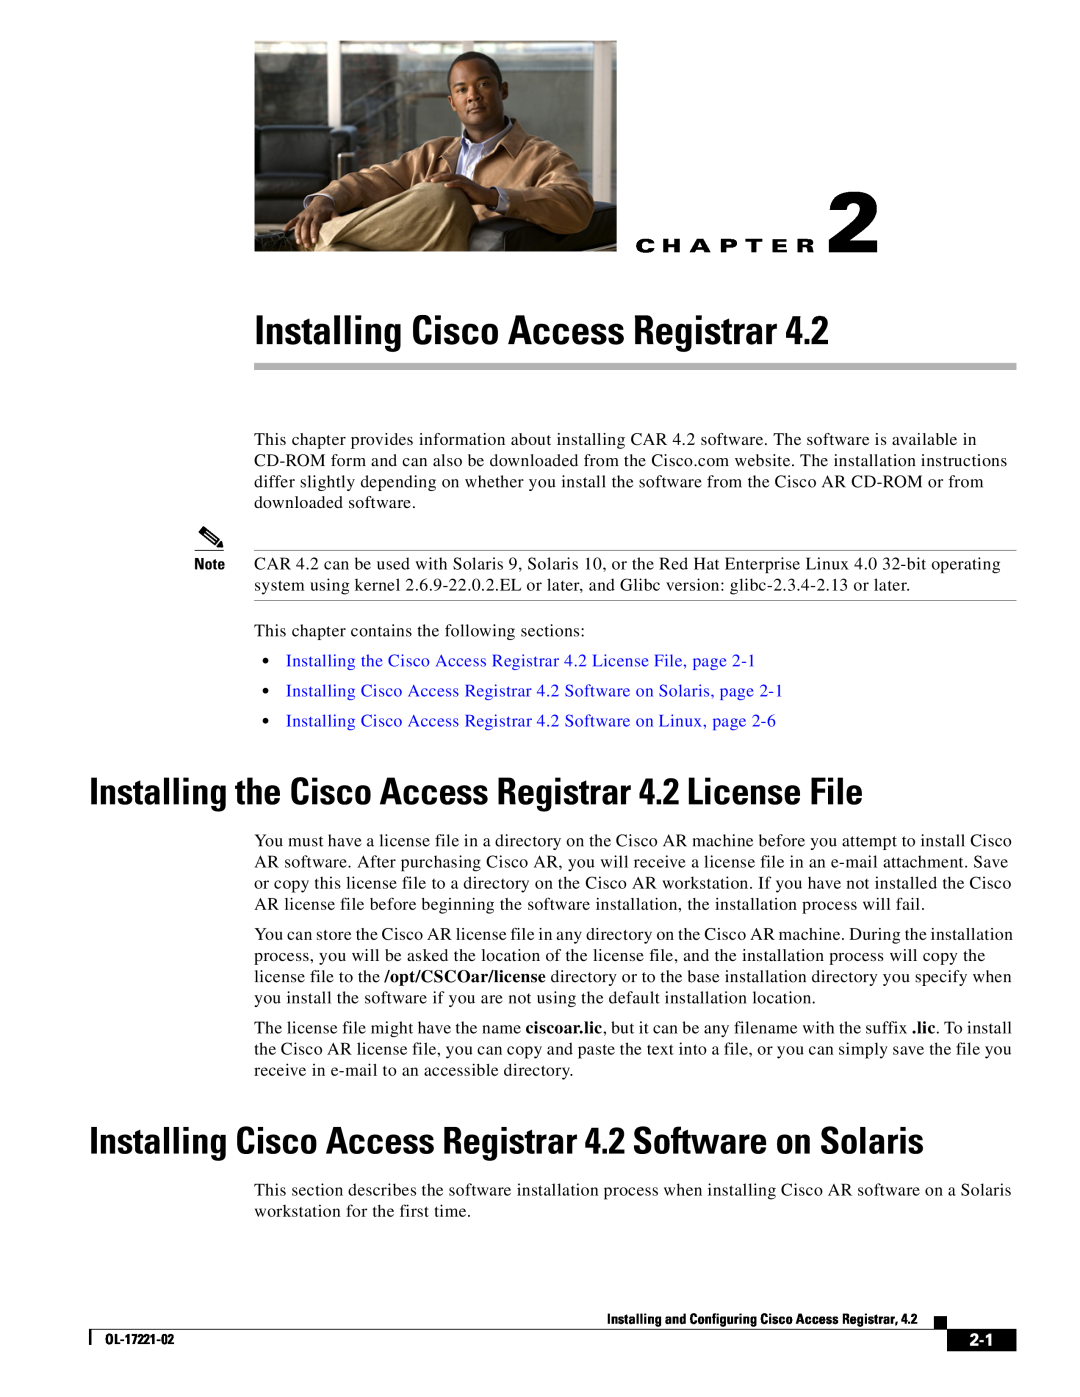 Cisco Systems Installing Cisco Access Registrar, Installing the Cisco Access Registrar 4.2 License File, C H A P T E R 